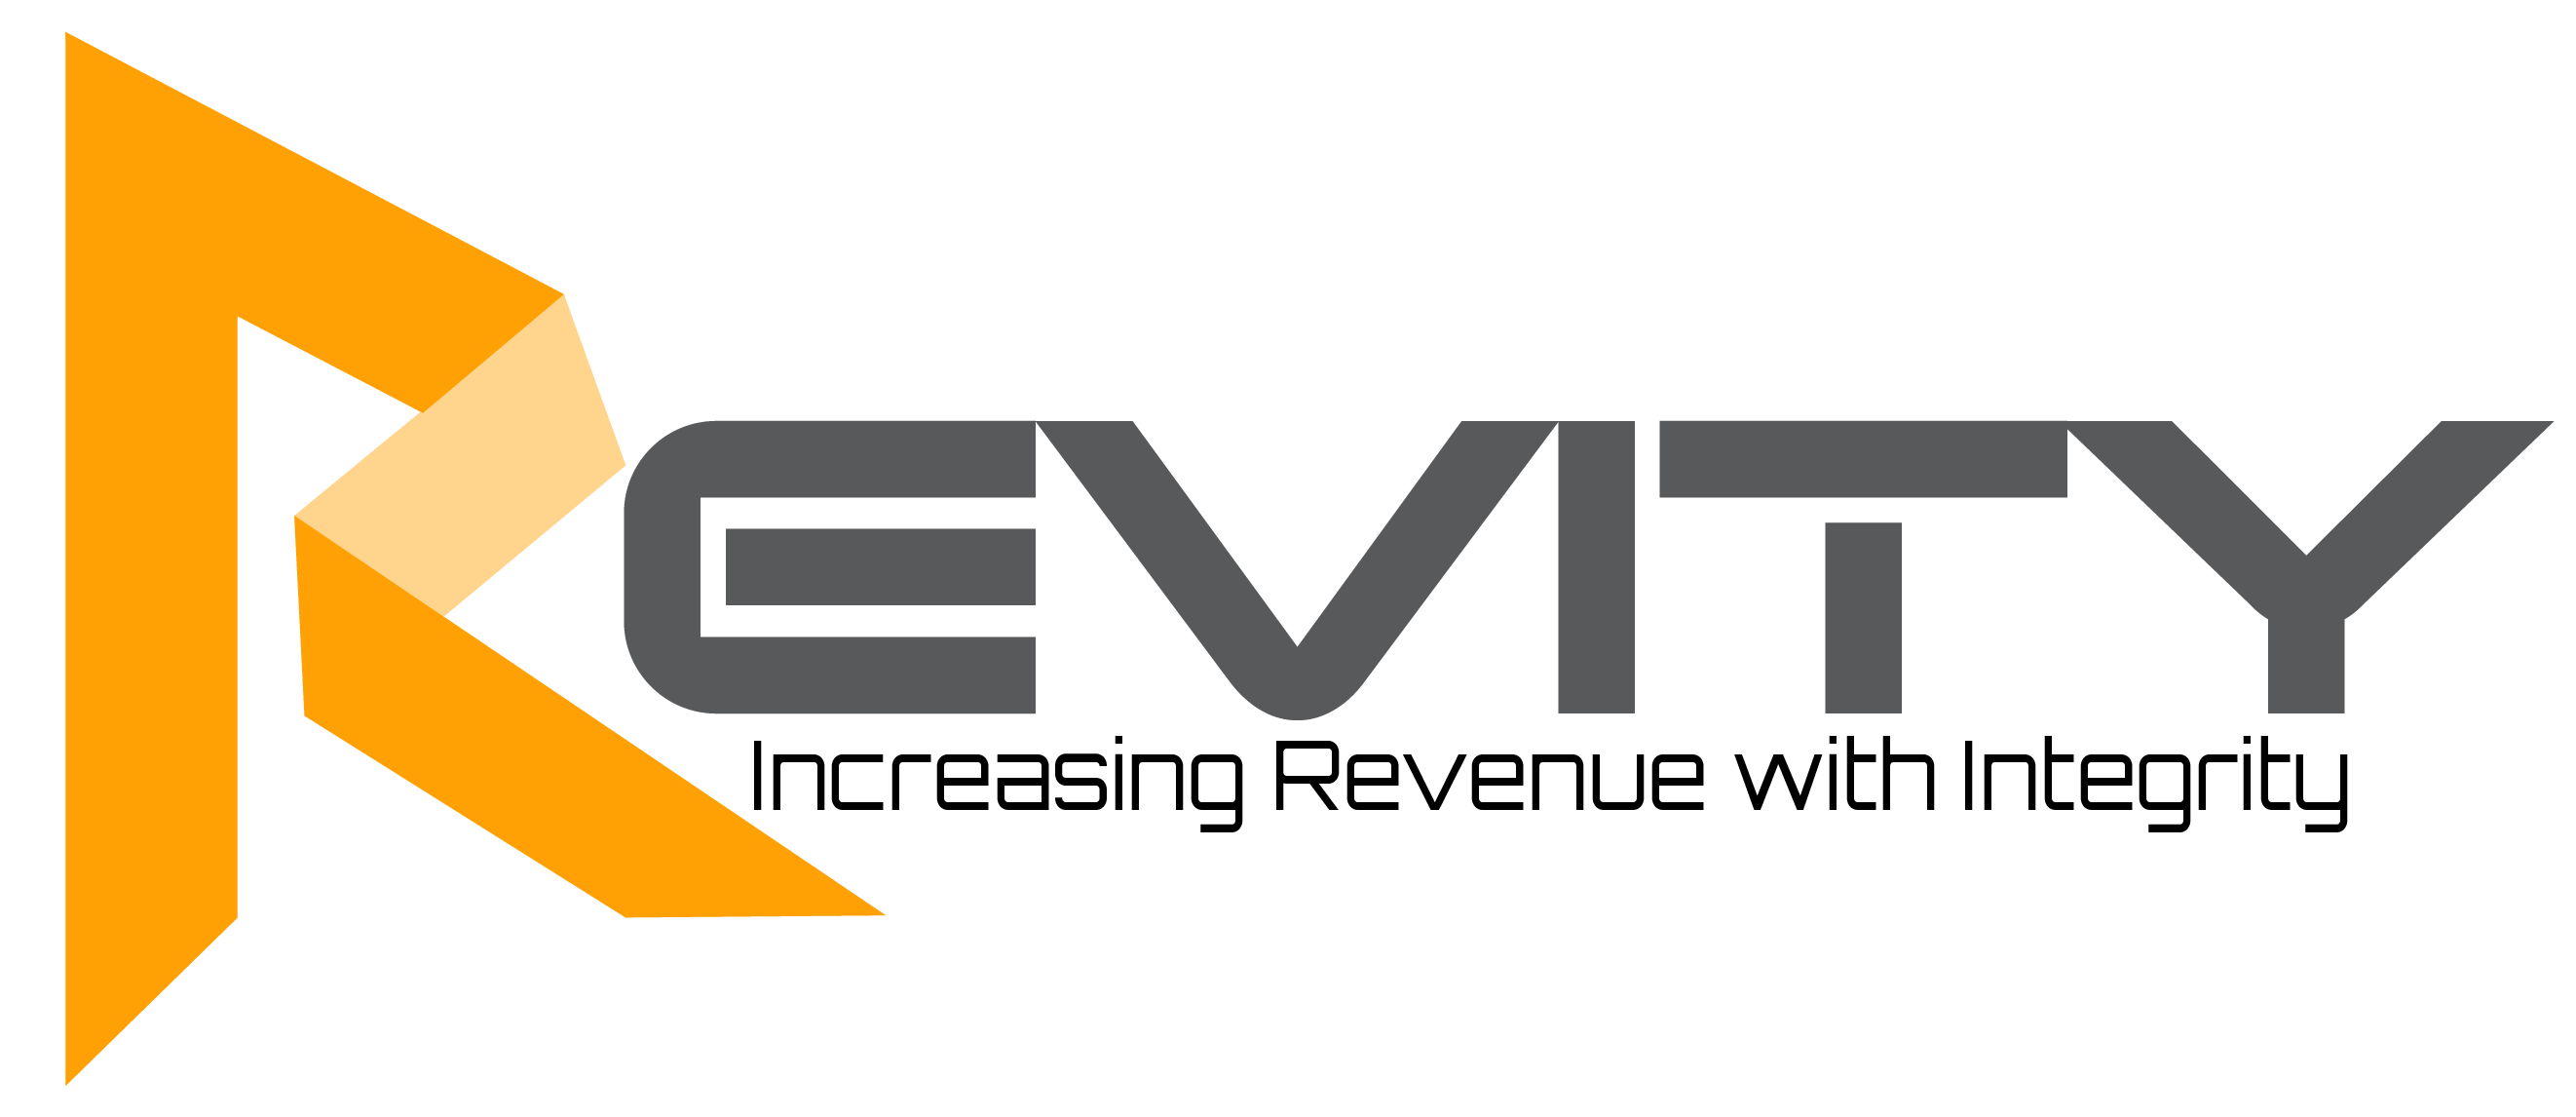 REVITY's Logo